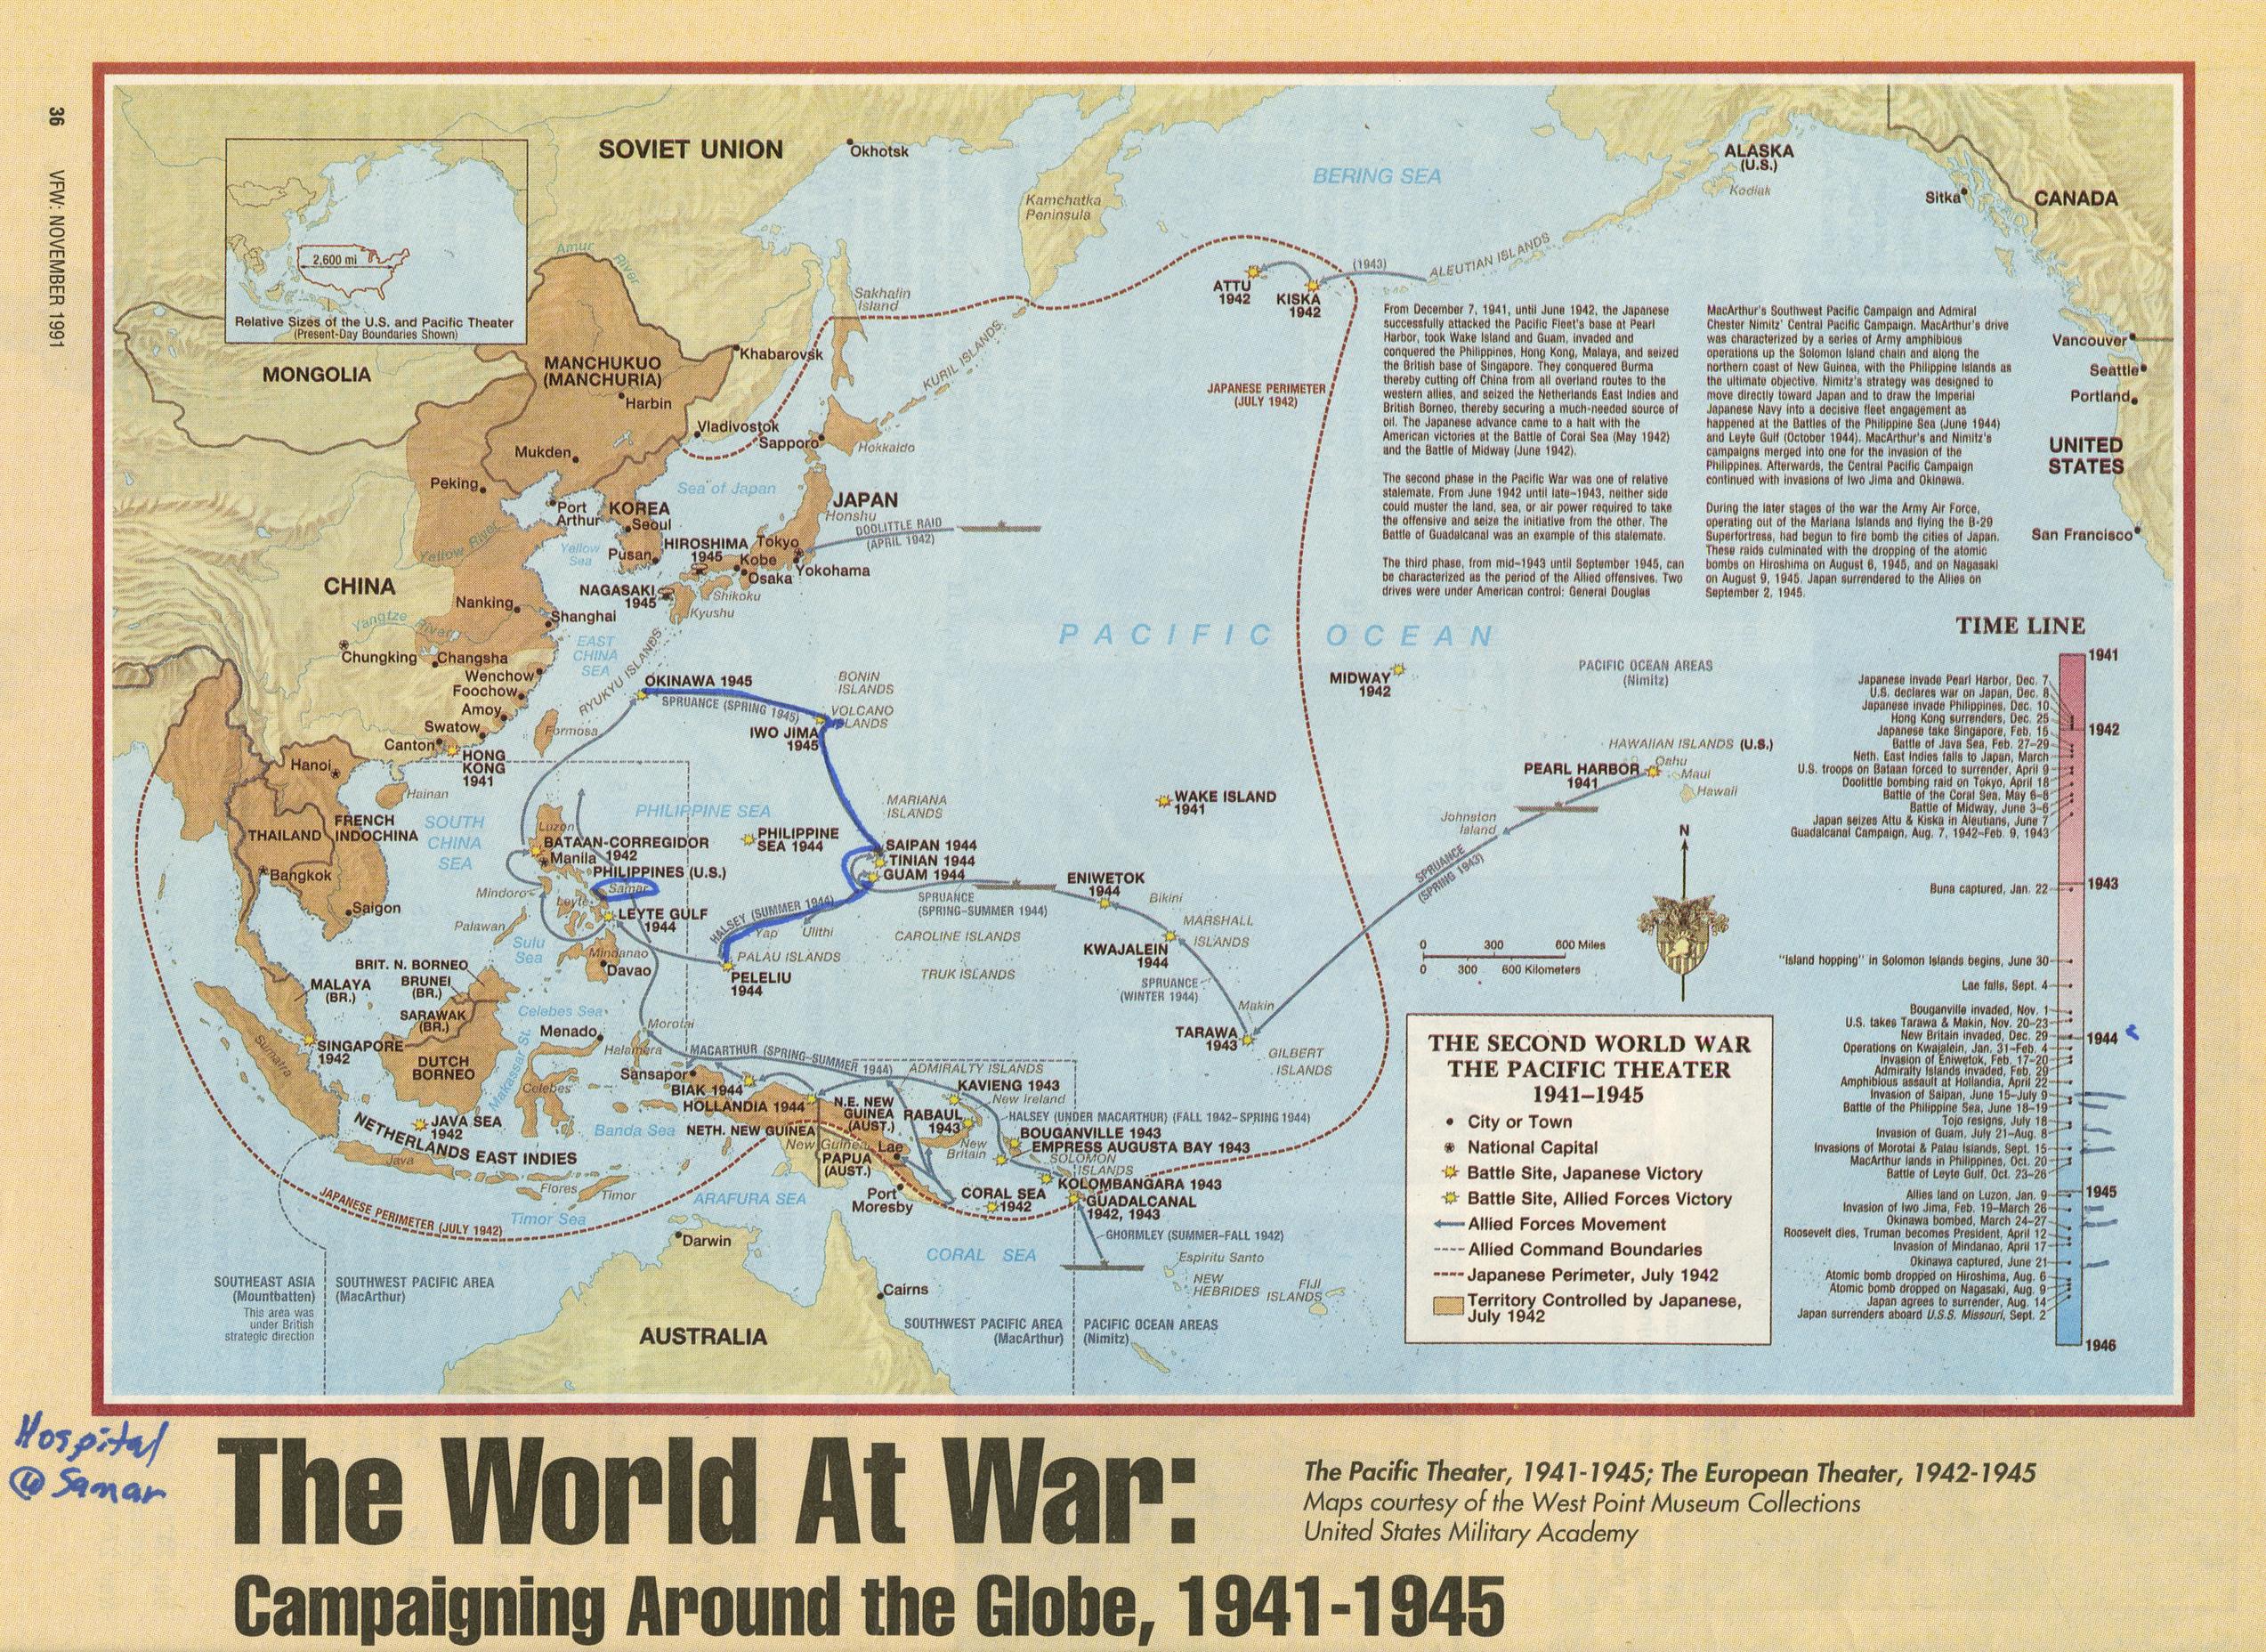 World War II - Europe, Pacific, Victory